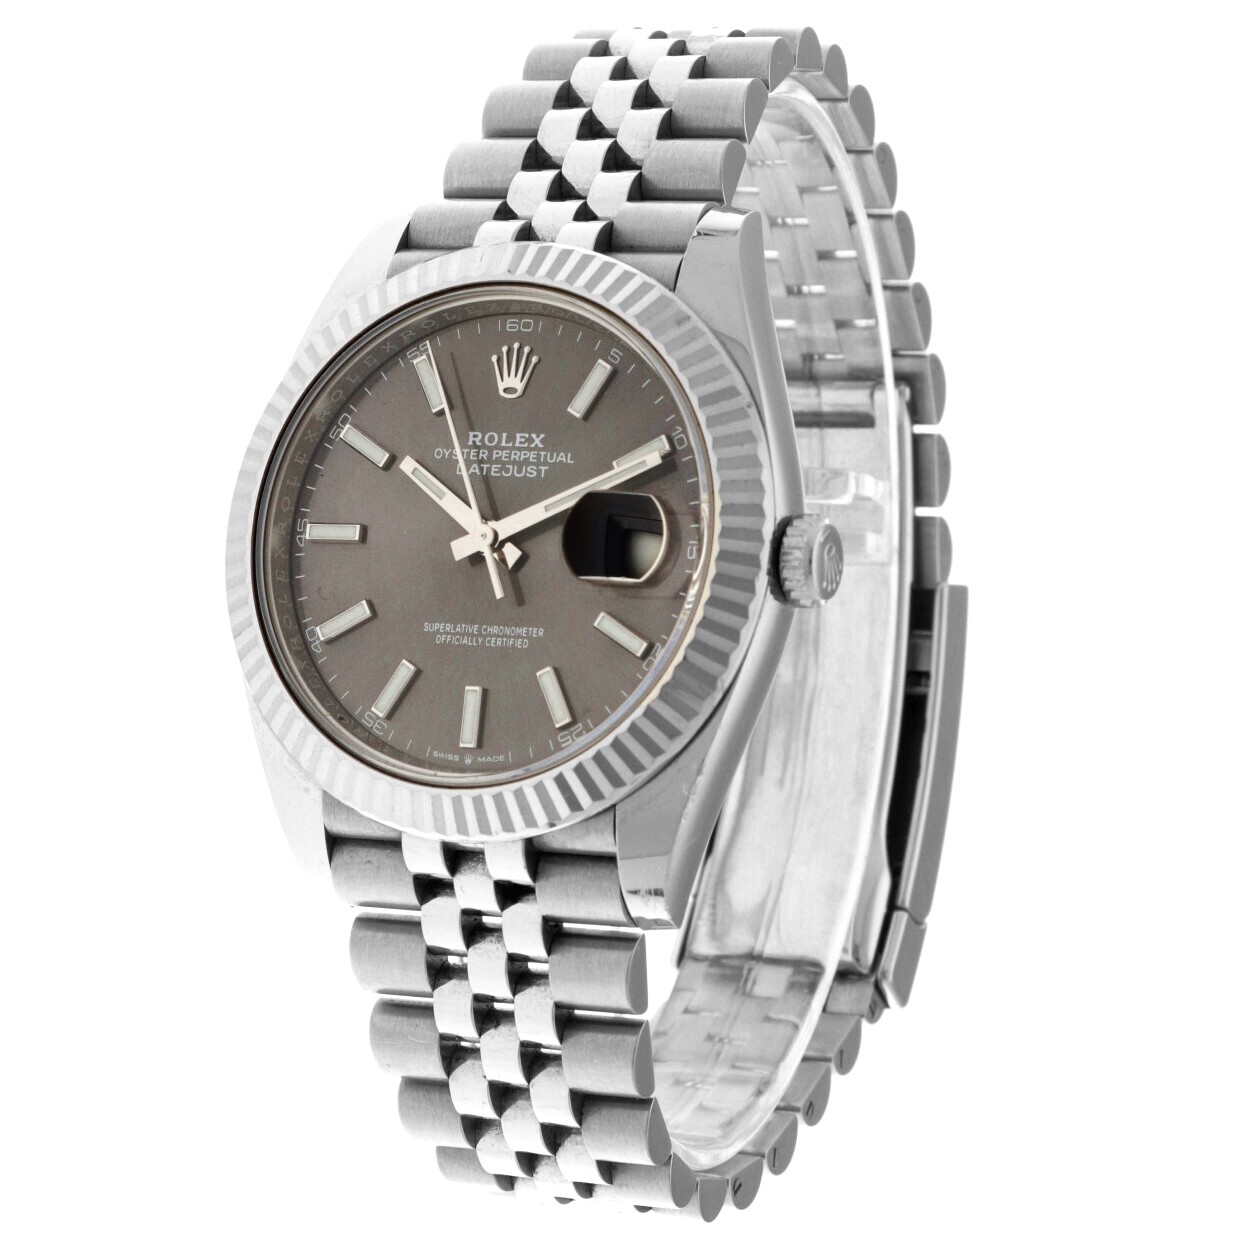 No Reserve - Rolex Datejust 41 126334 - Men's watch - 2019. - Image 2 of 6